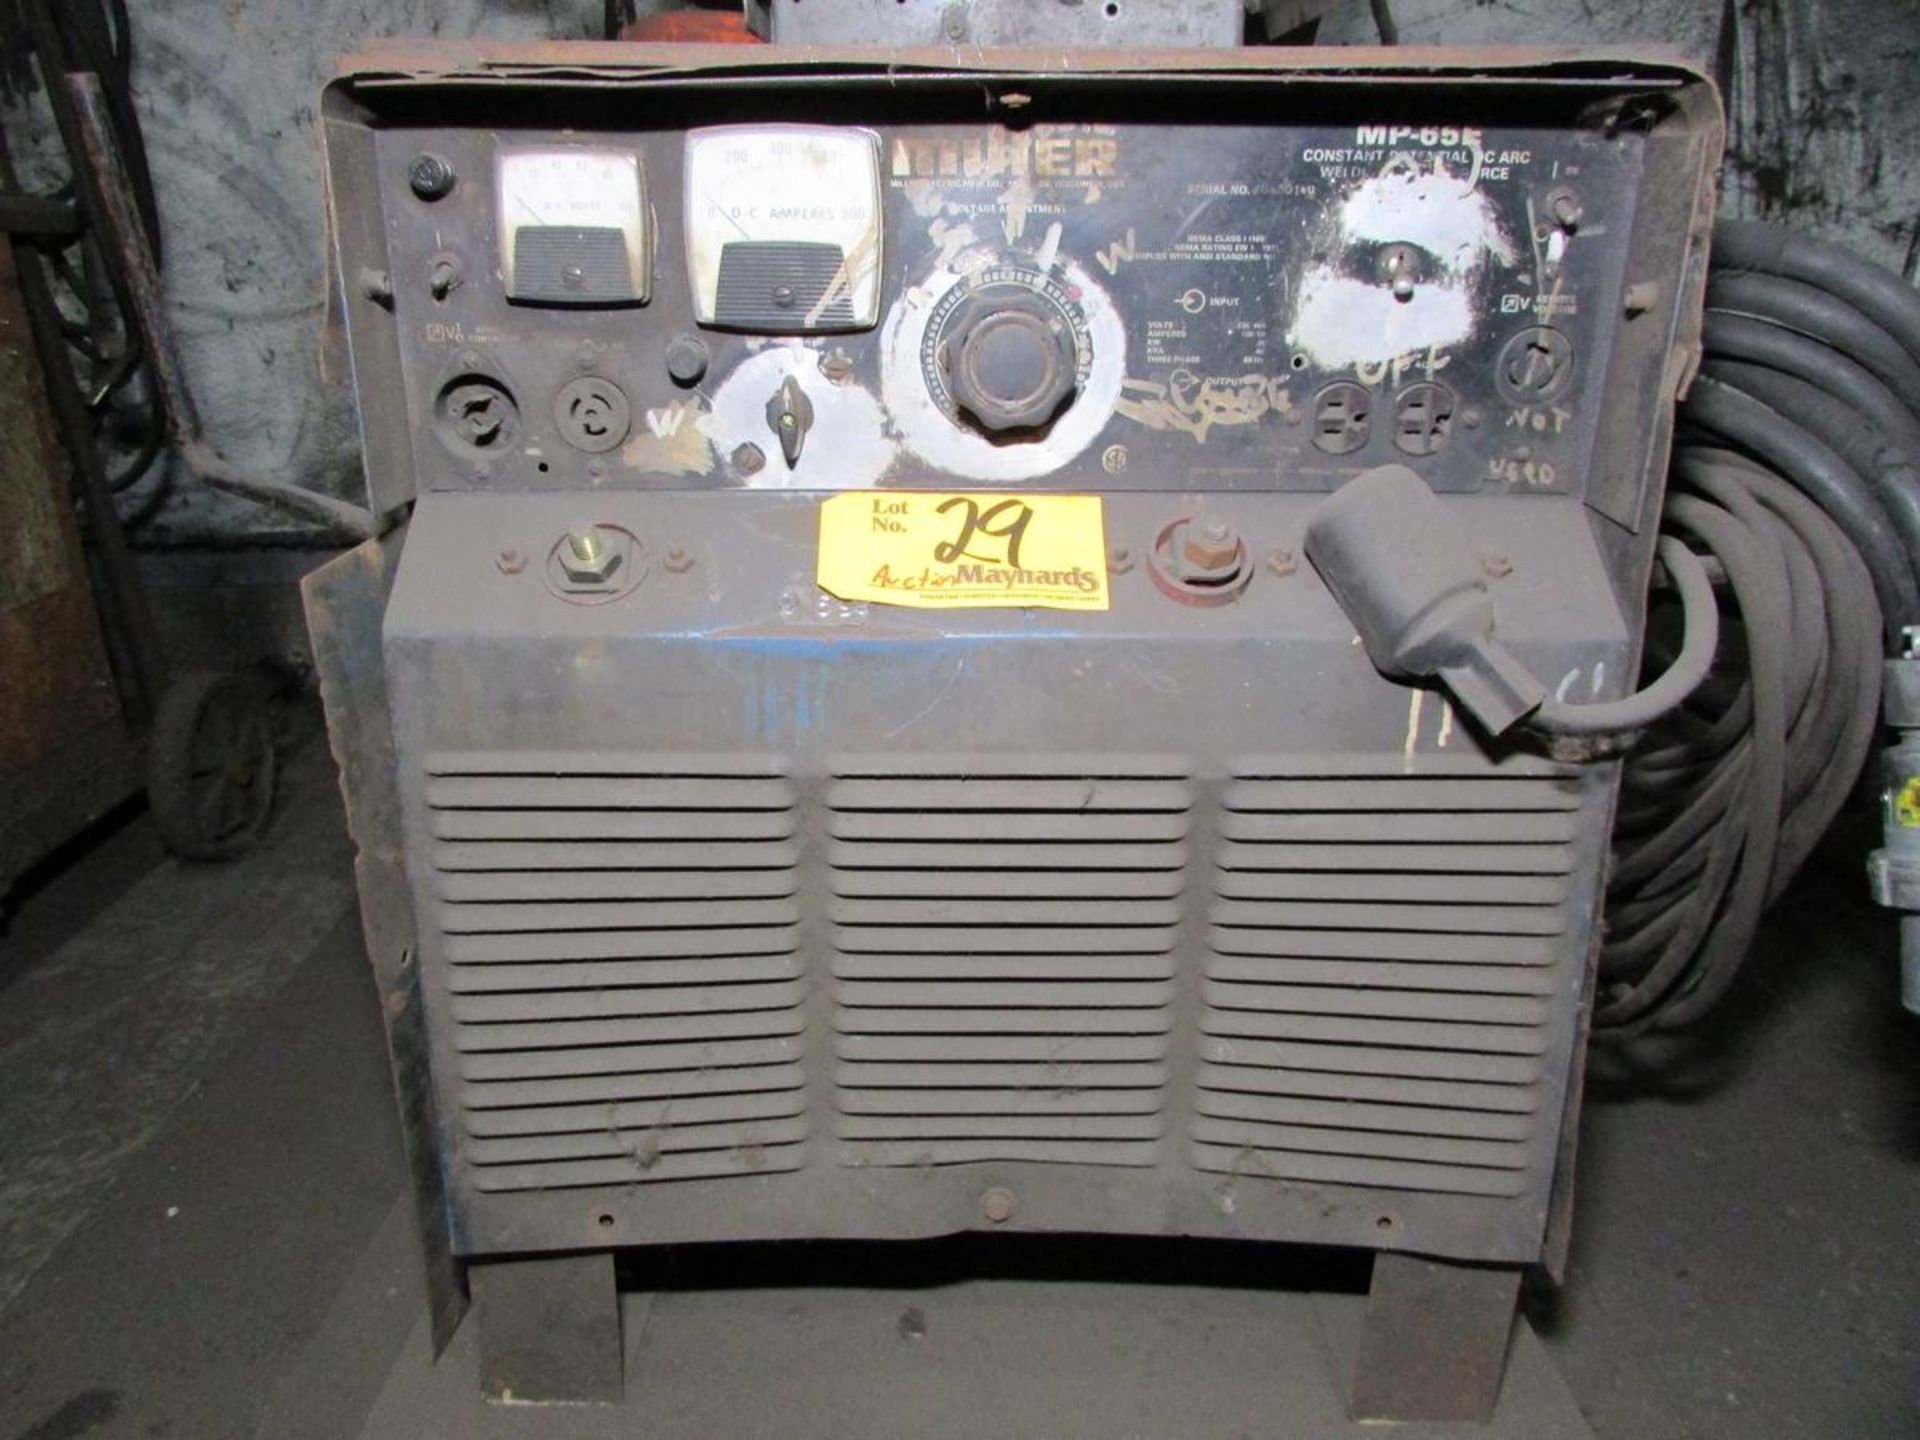 Miller MP-65E 650A CP Arc Welding Power Source - Image 3 of 8